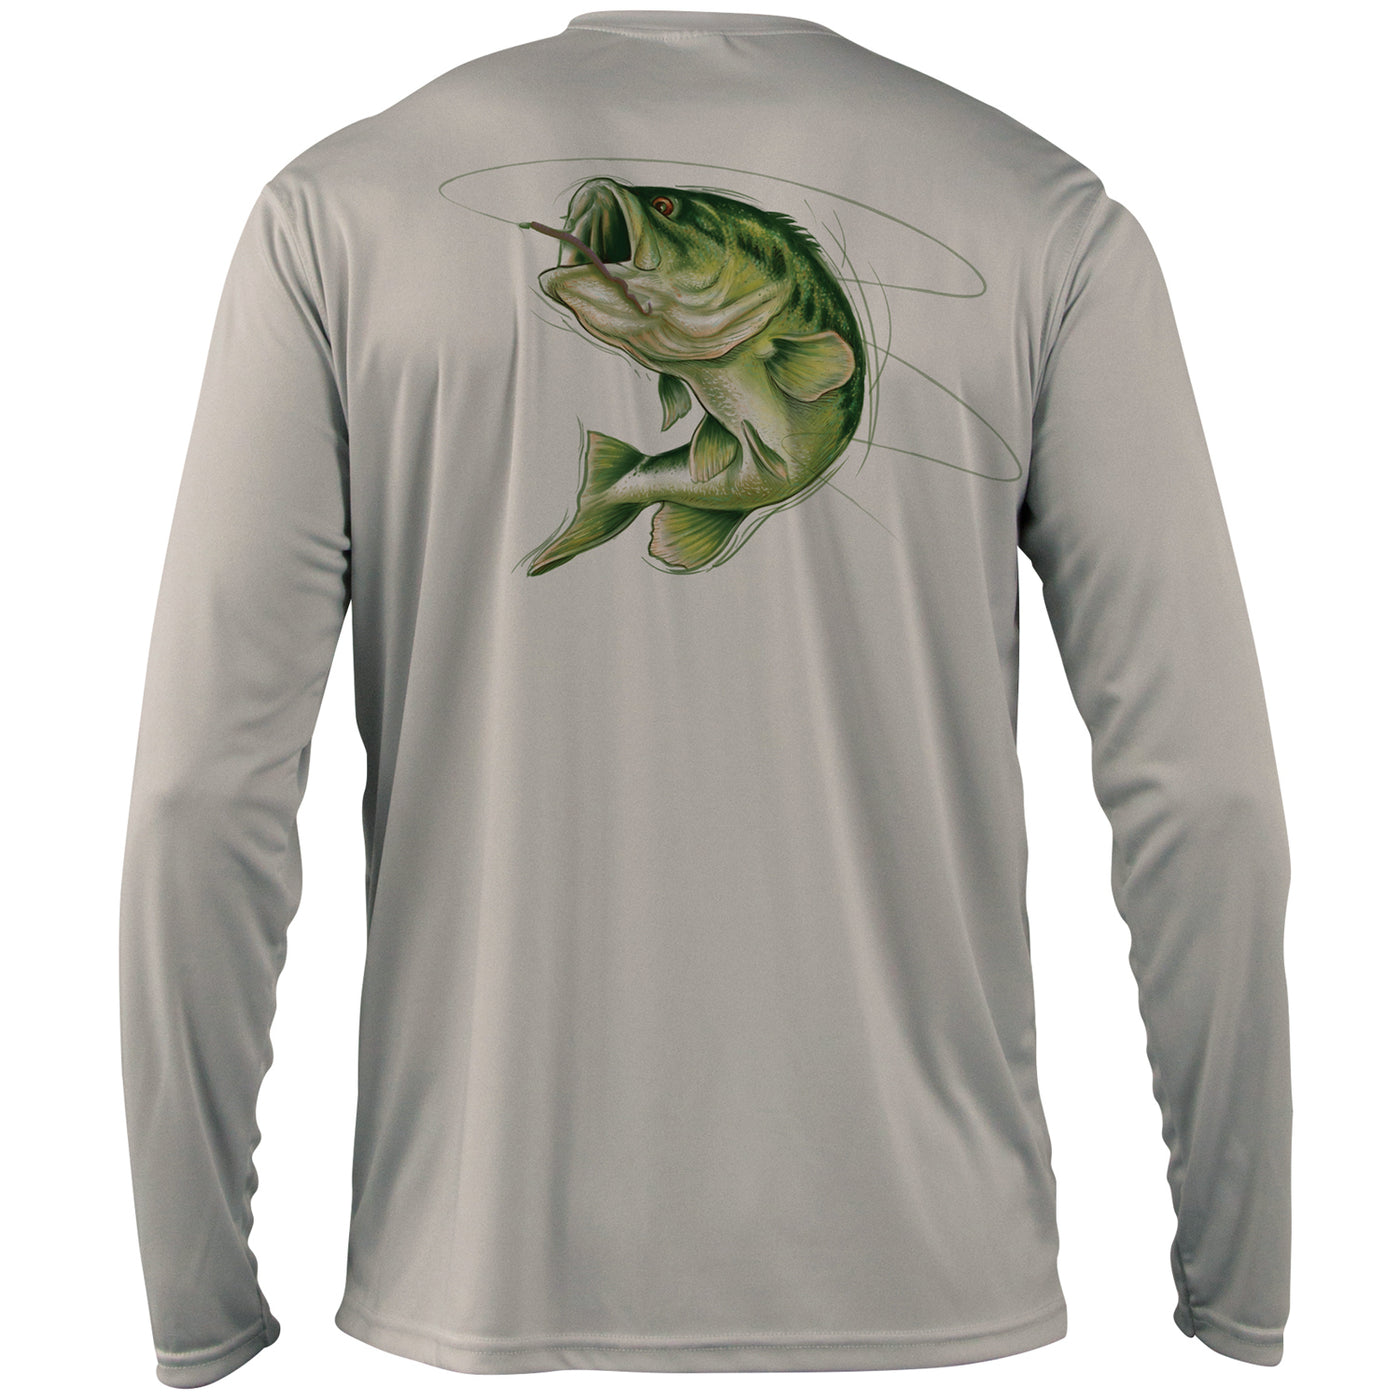 Mossy Oak Fishing Graphic Sun Protection Long Sleeve Shirt